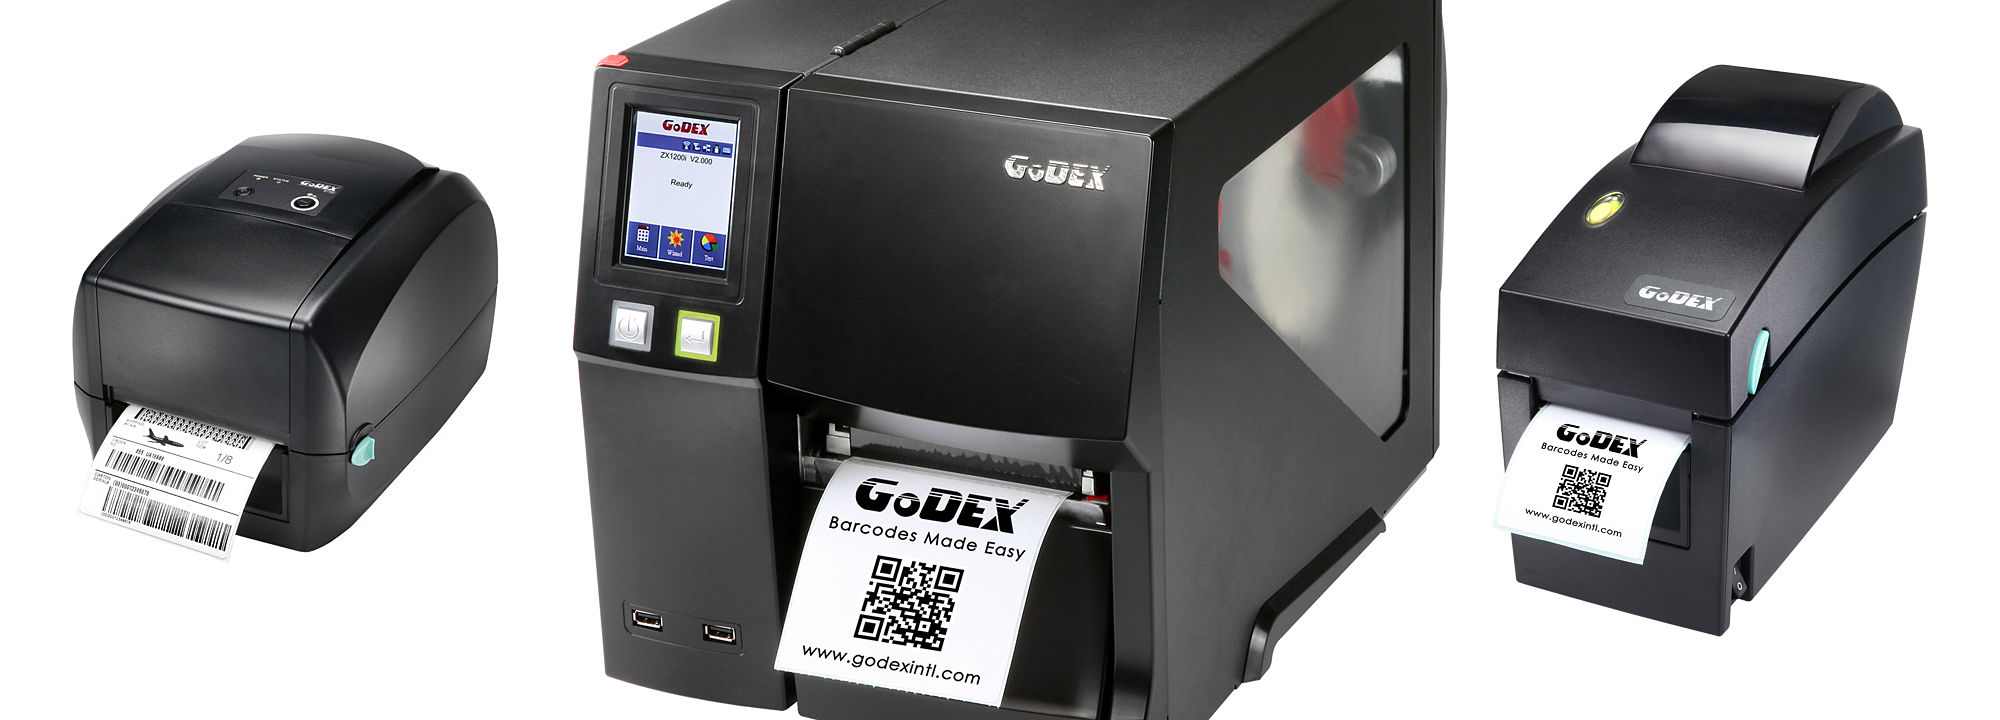 godex label printers